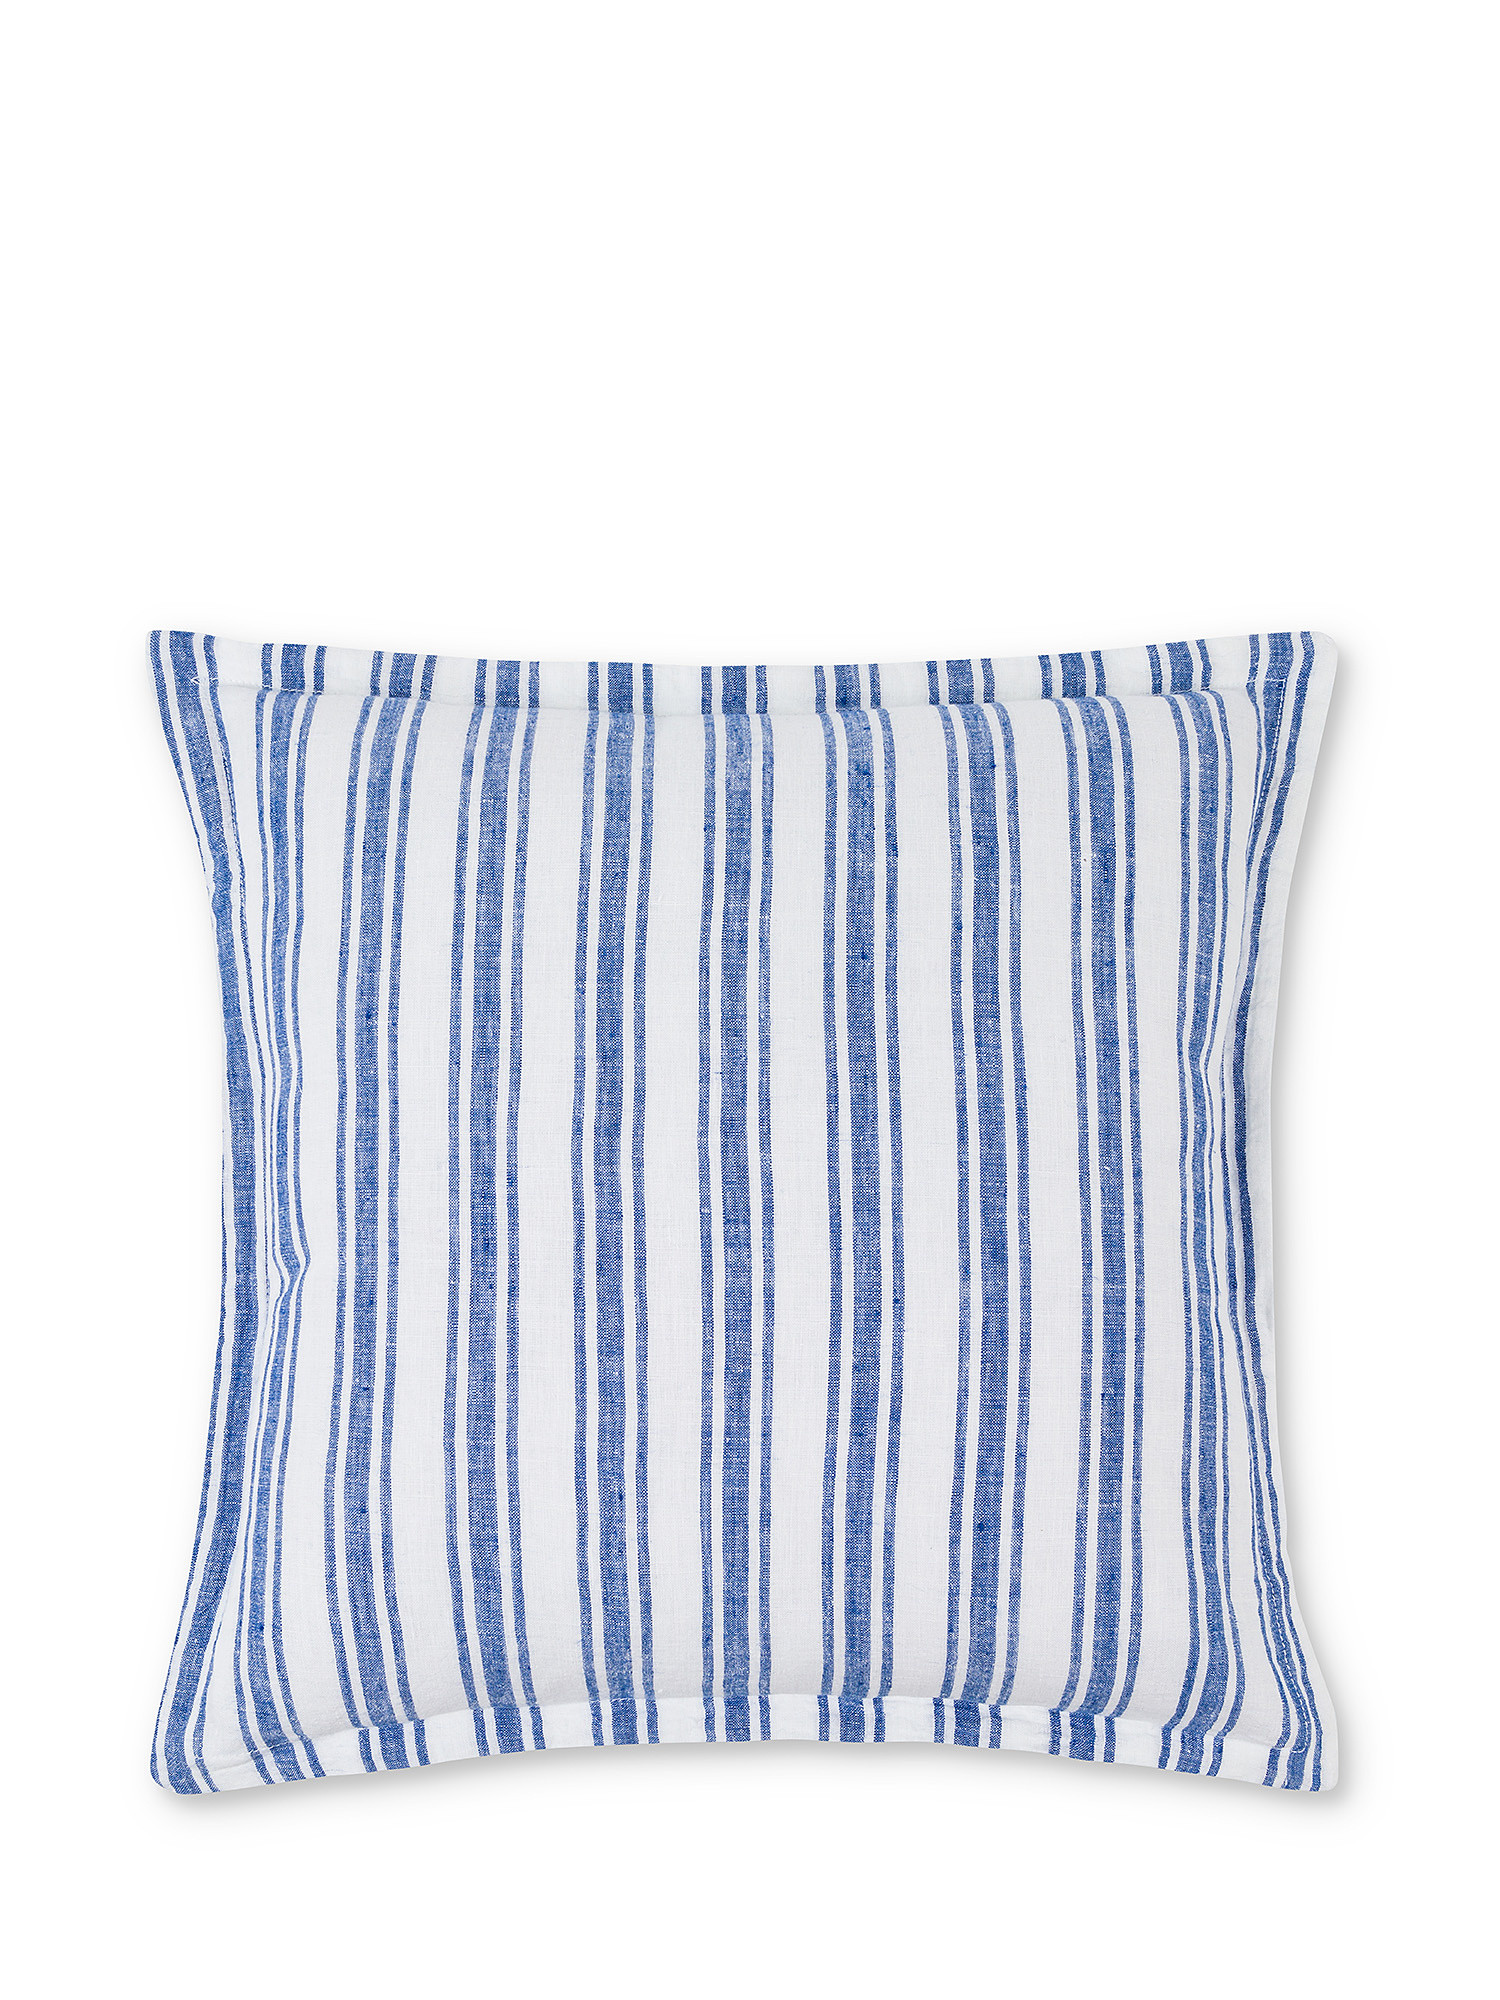 Cuscino puro lino a righe 45x45cm, Azzurro, large image number 0